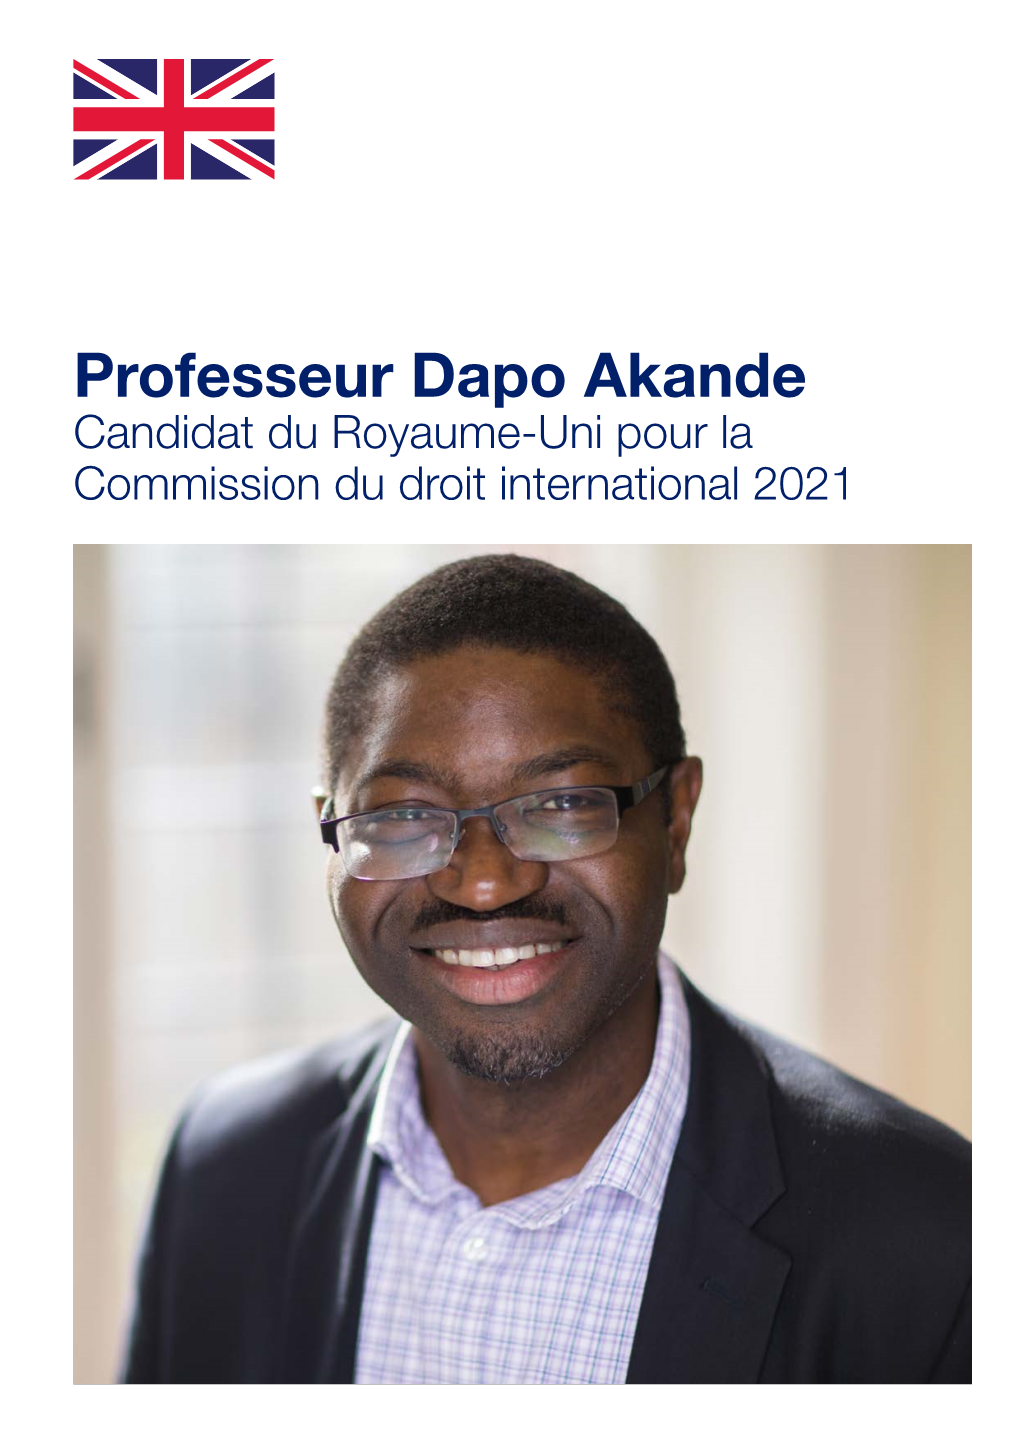 Professor Dapo Akande